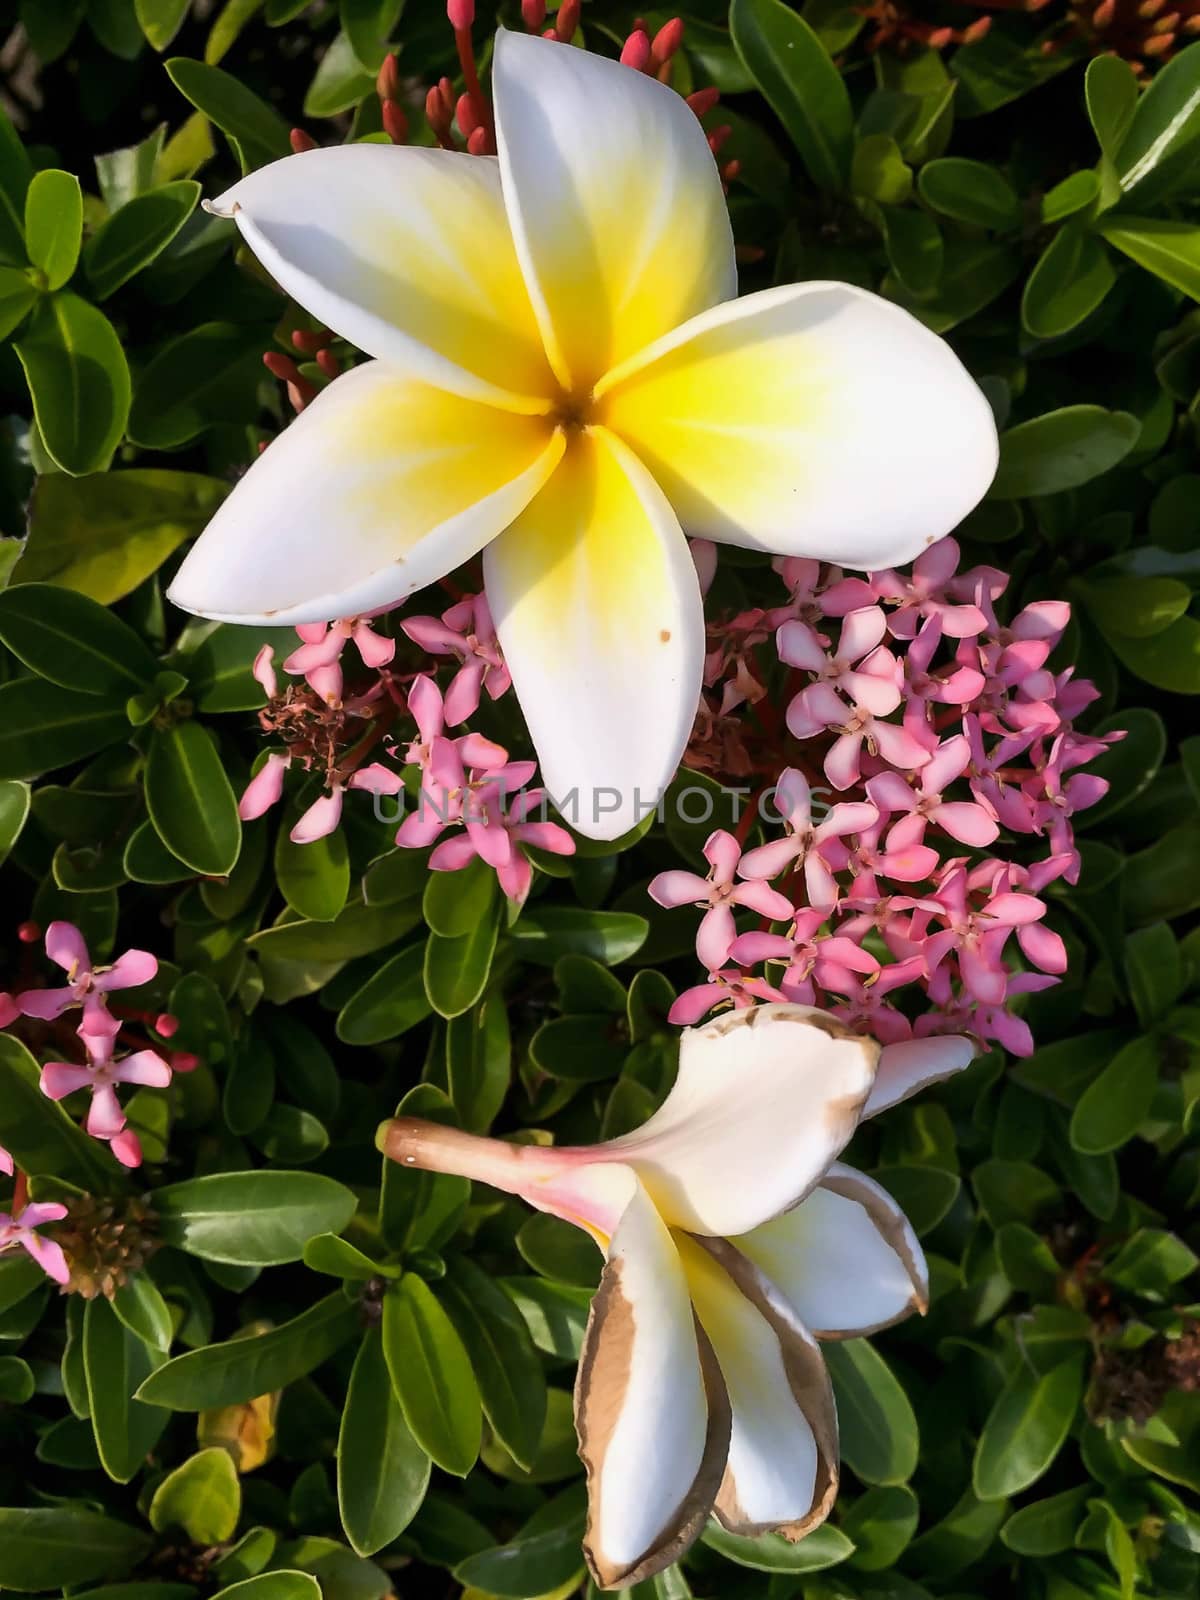 Closeup white and yellow plumeria flower